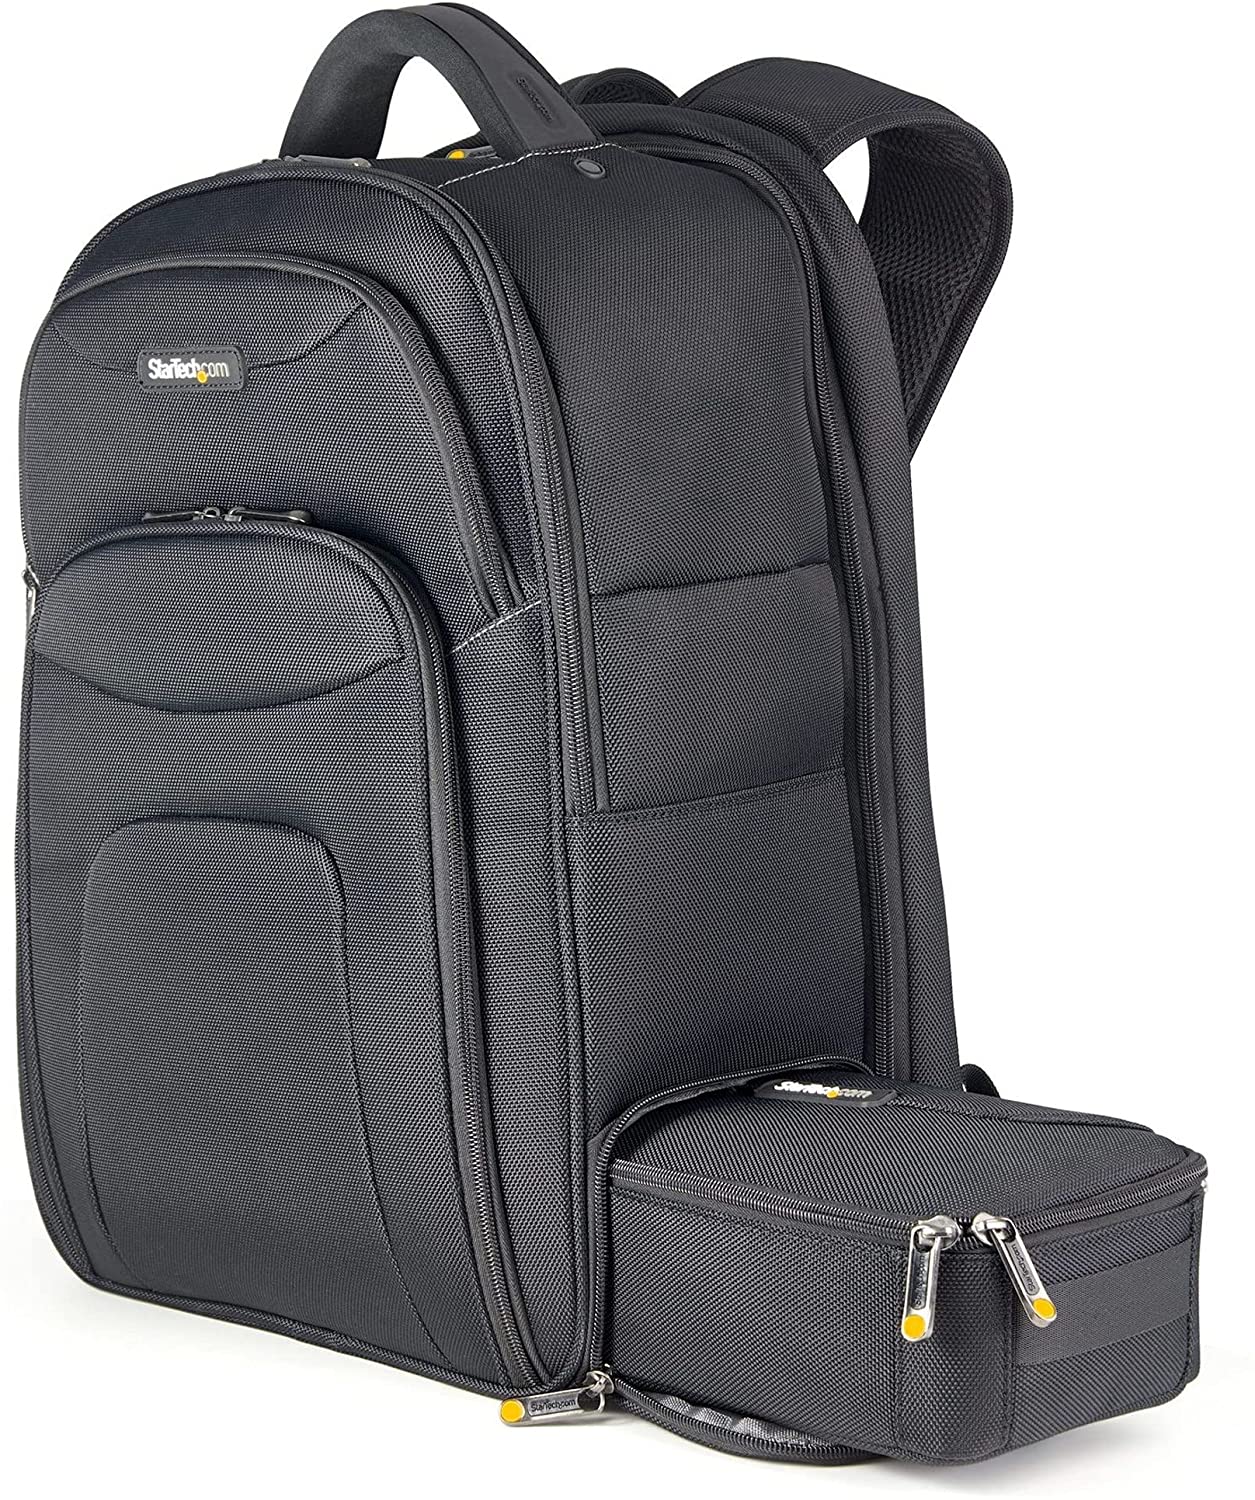 SAMSONITE Encompass Women's Bordeaux Convertible Brief Backpack Laptop Bag  | eBay